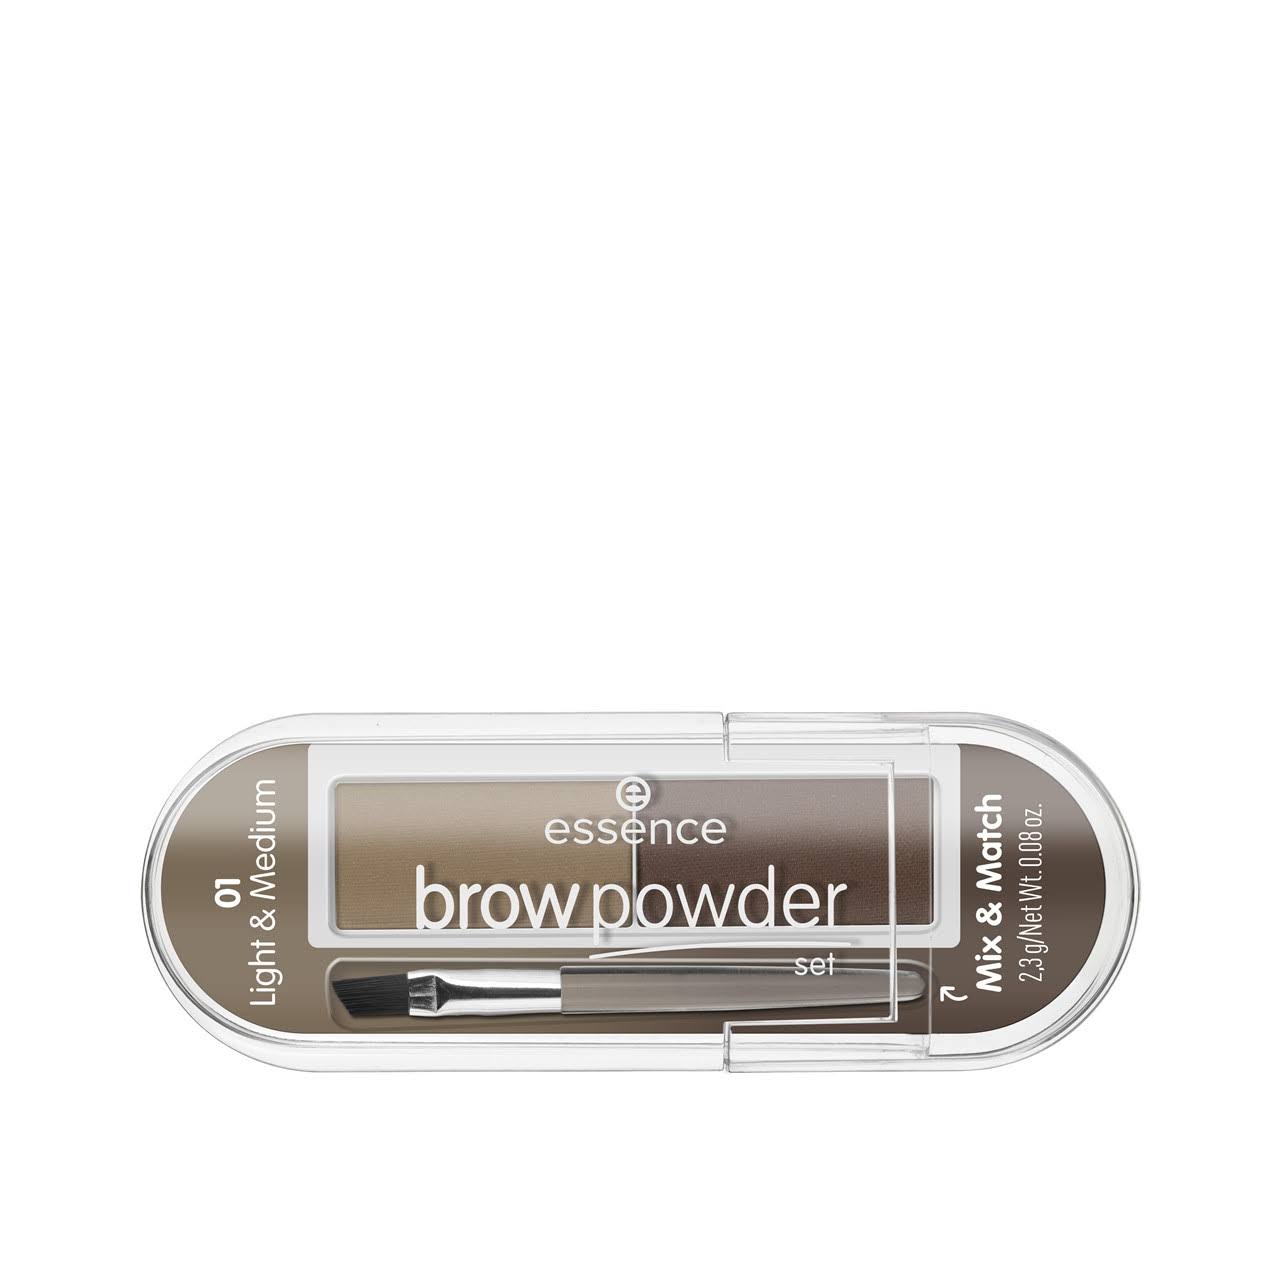 Essence Eyebrow powder set 1